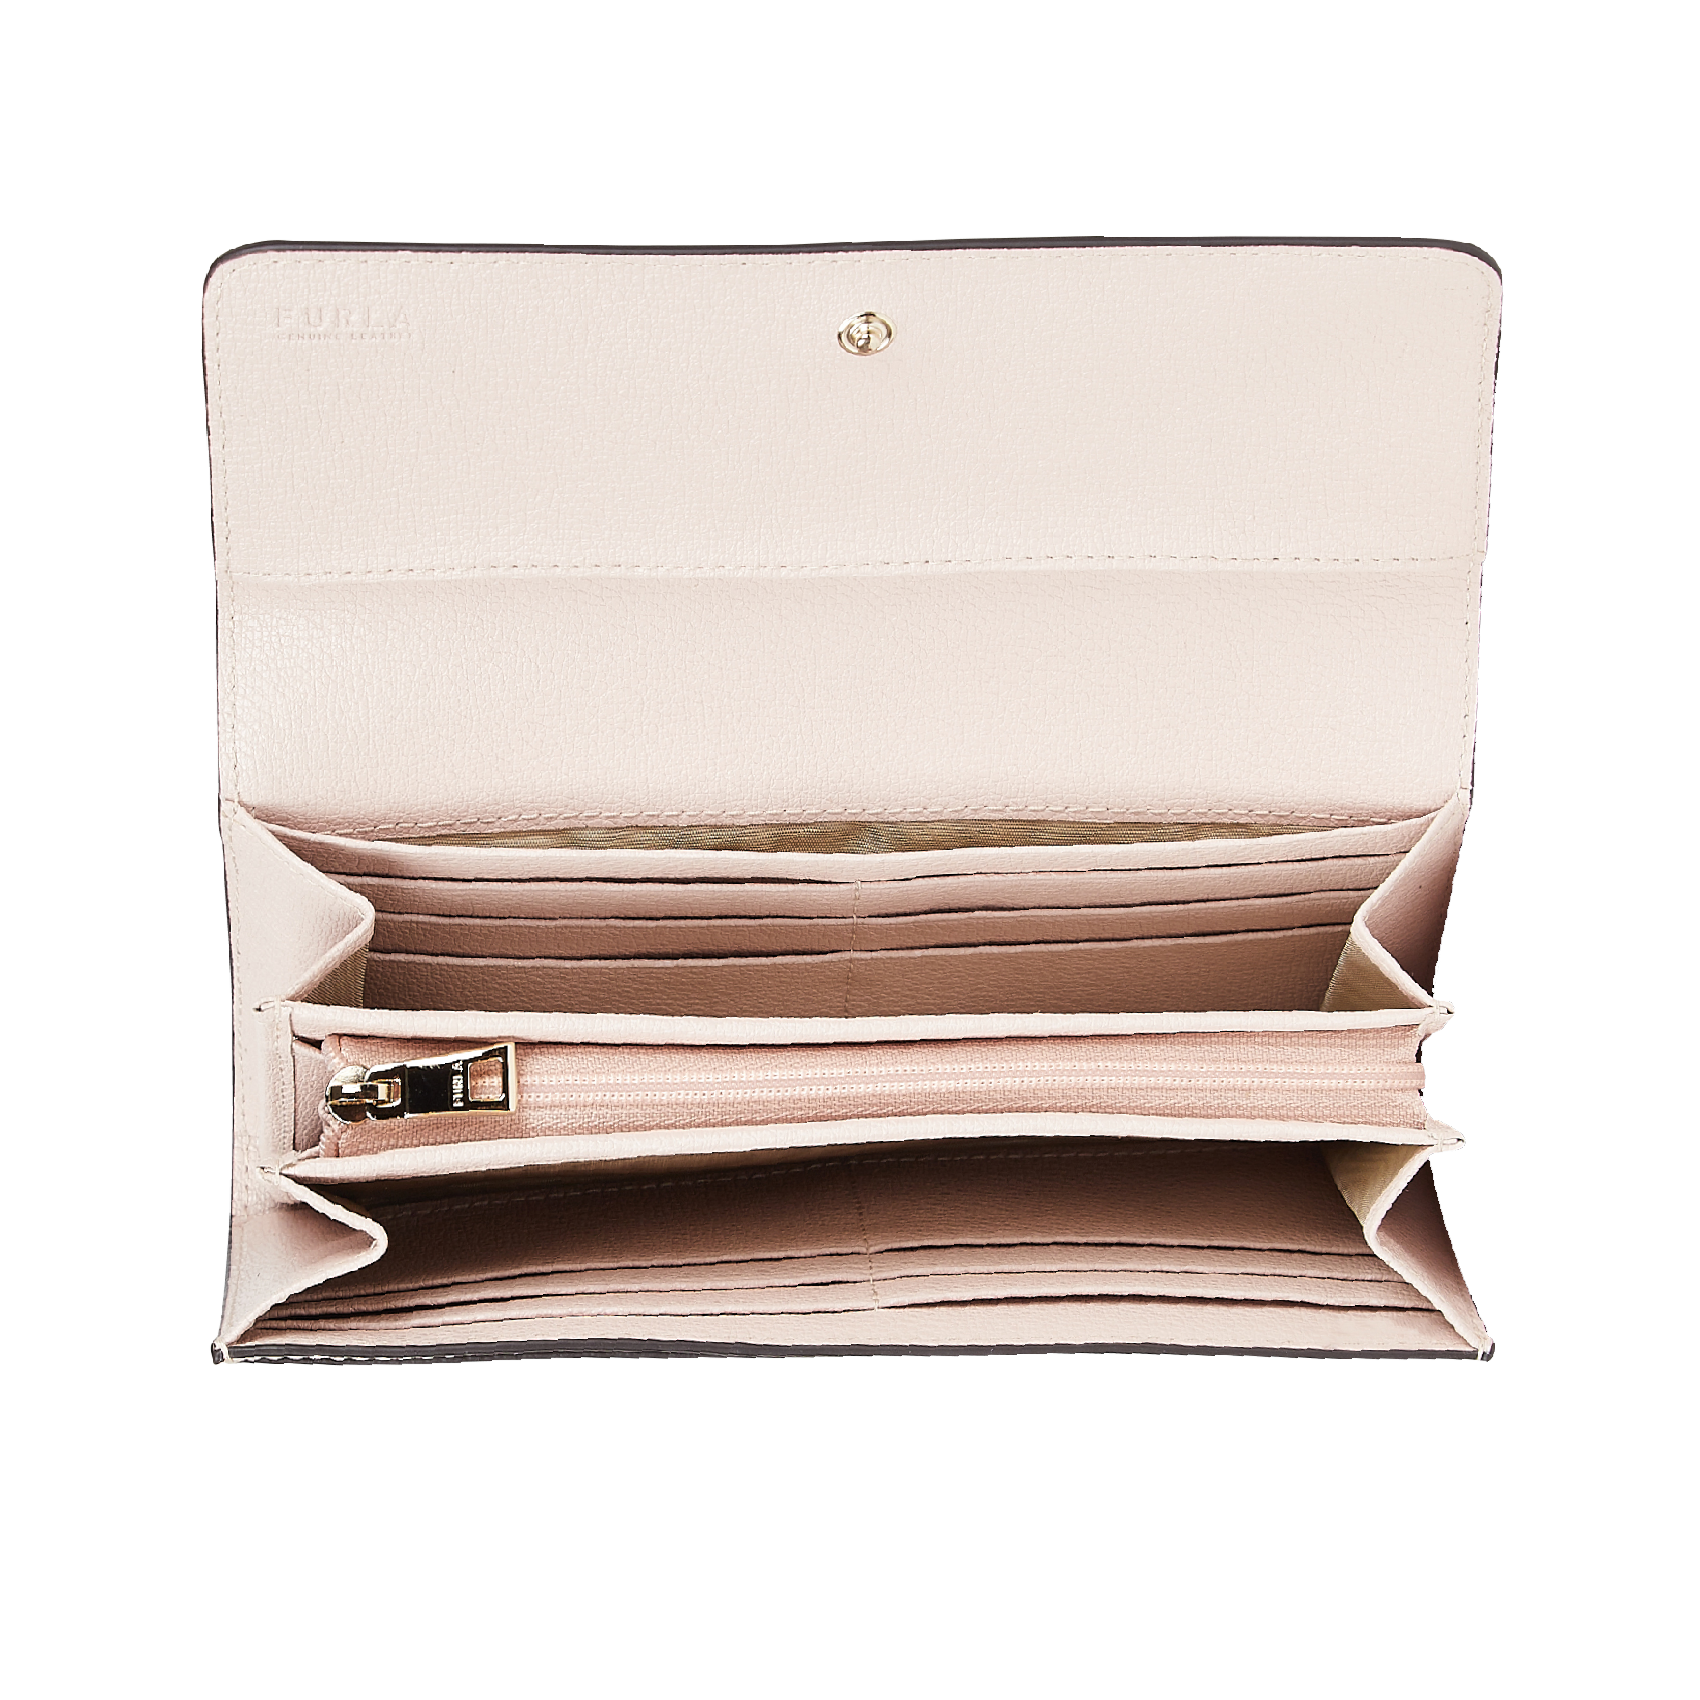 WOMEN FASHION Accessories Wallet Multicolored Single discount 70% Roxy wallet 